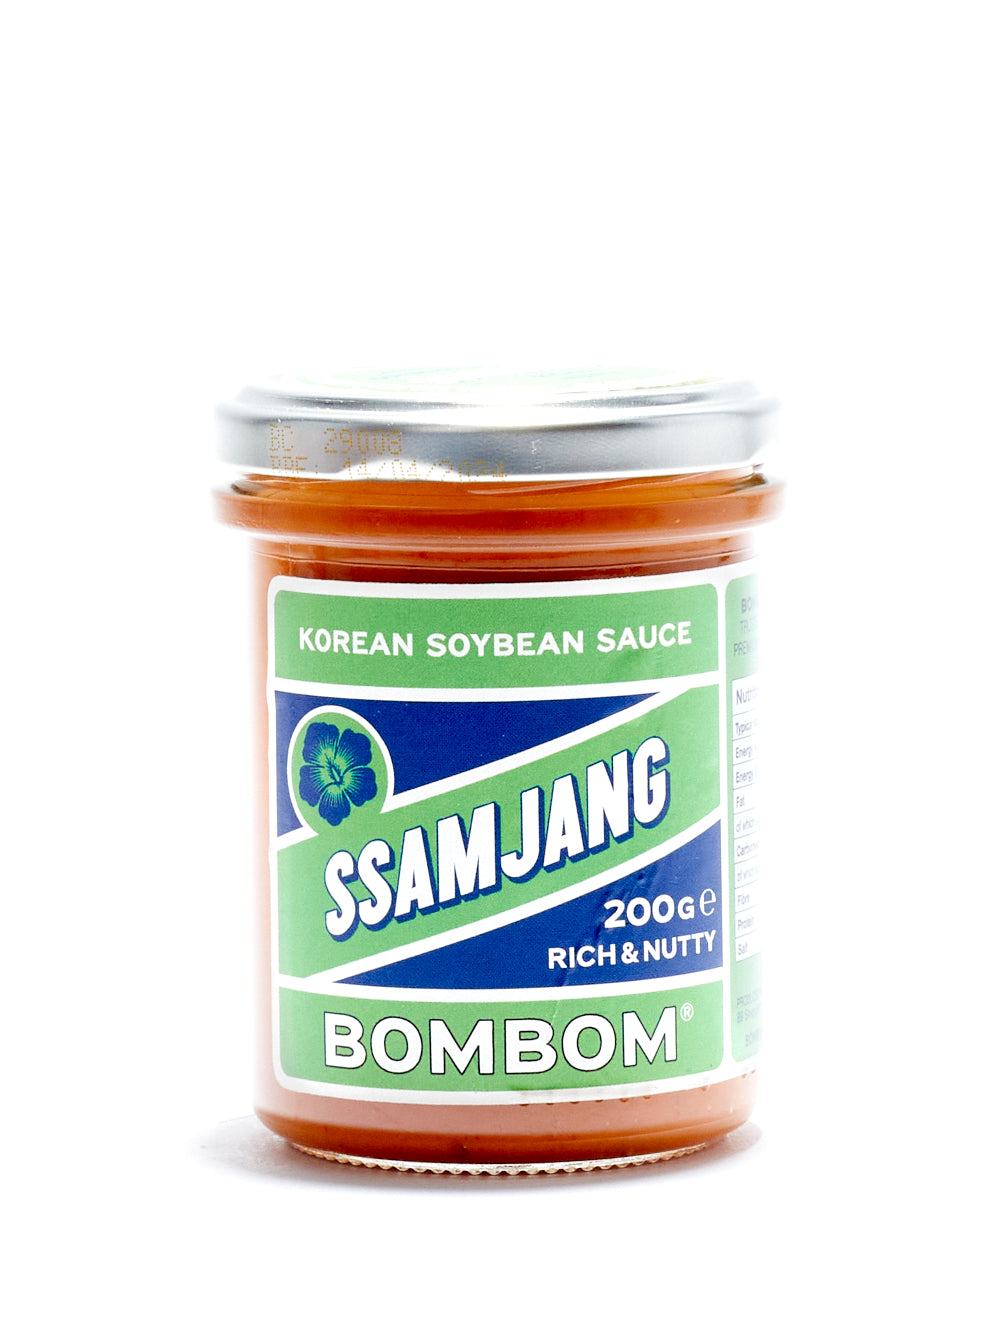 BOMBOM, Ssamjang Soybean Sauce